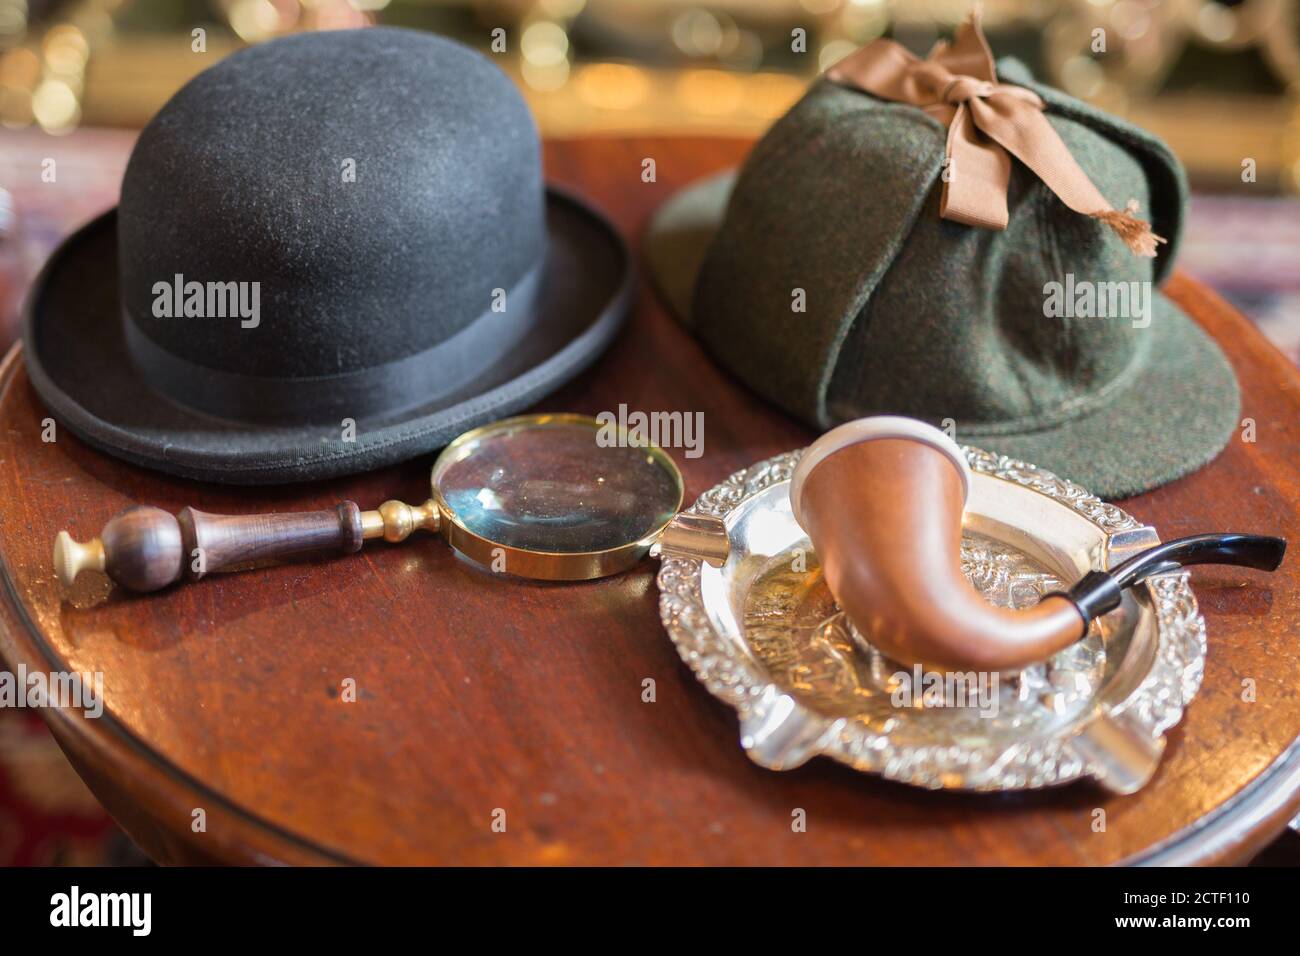 Sherlock Holmes Typical Objects on a Little Wooden Table: Deerstalker, Pipe, Magnifier. Stock Photo